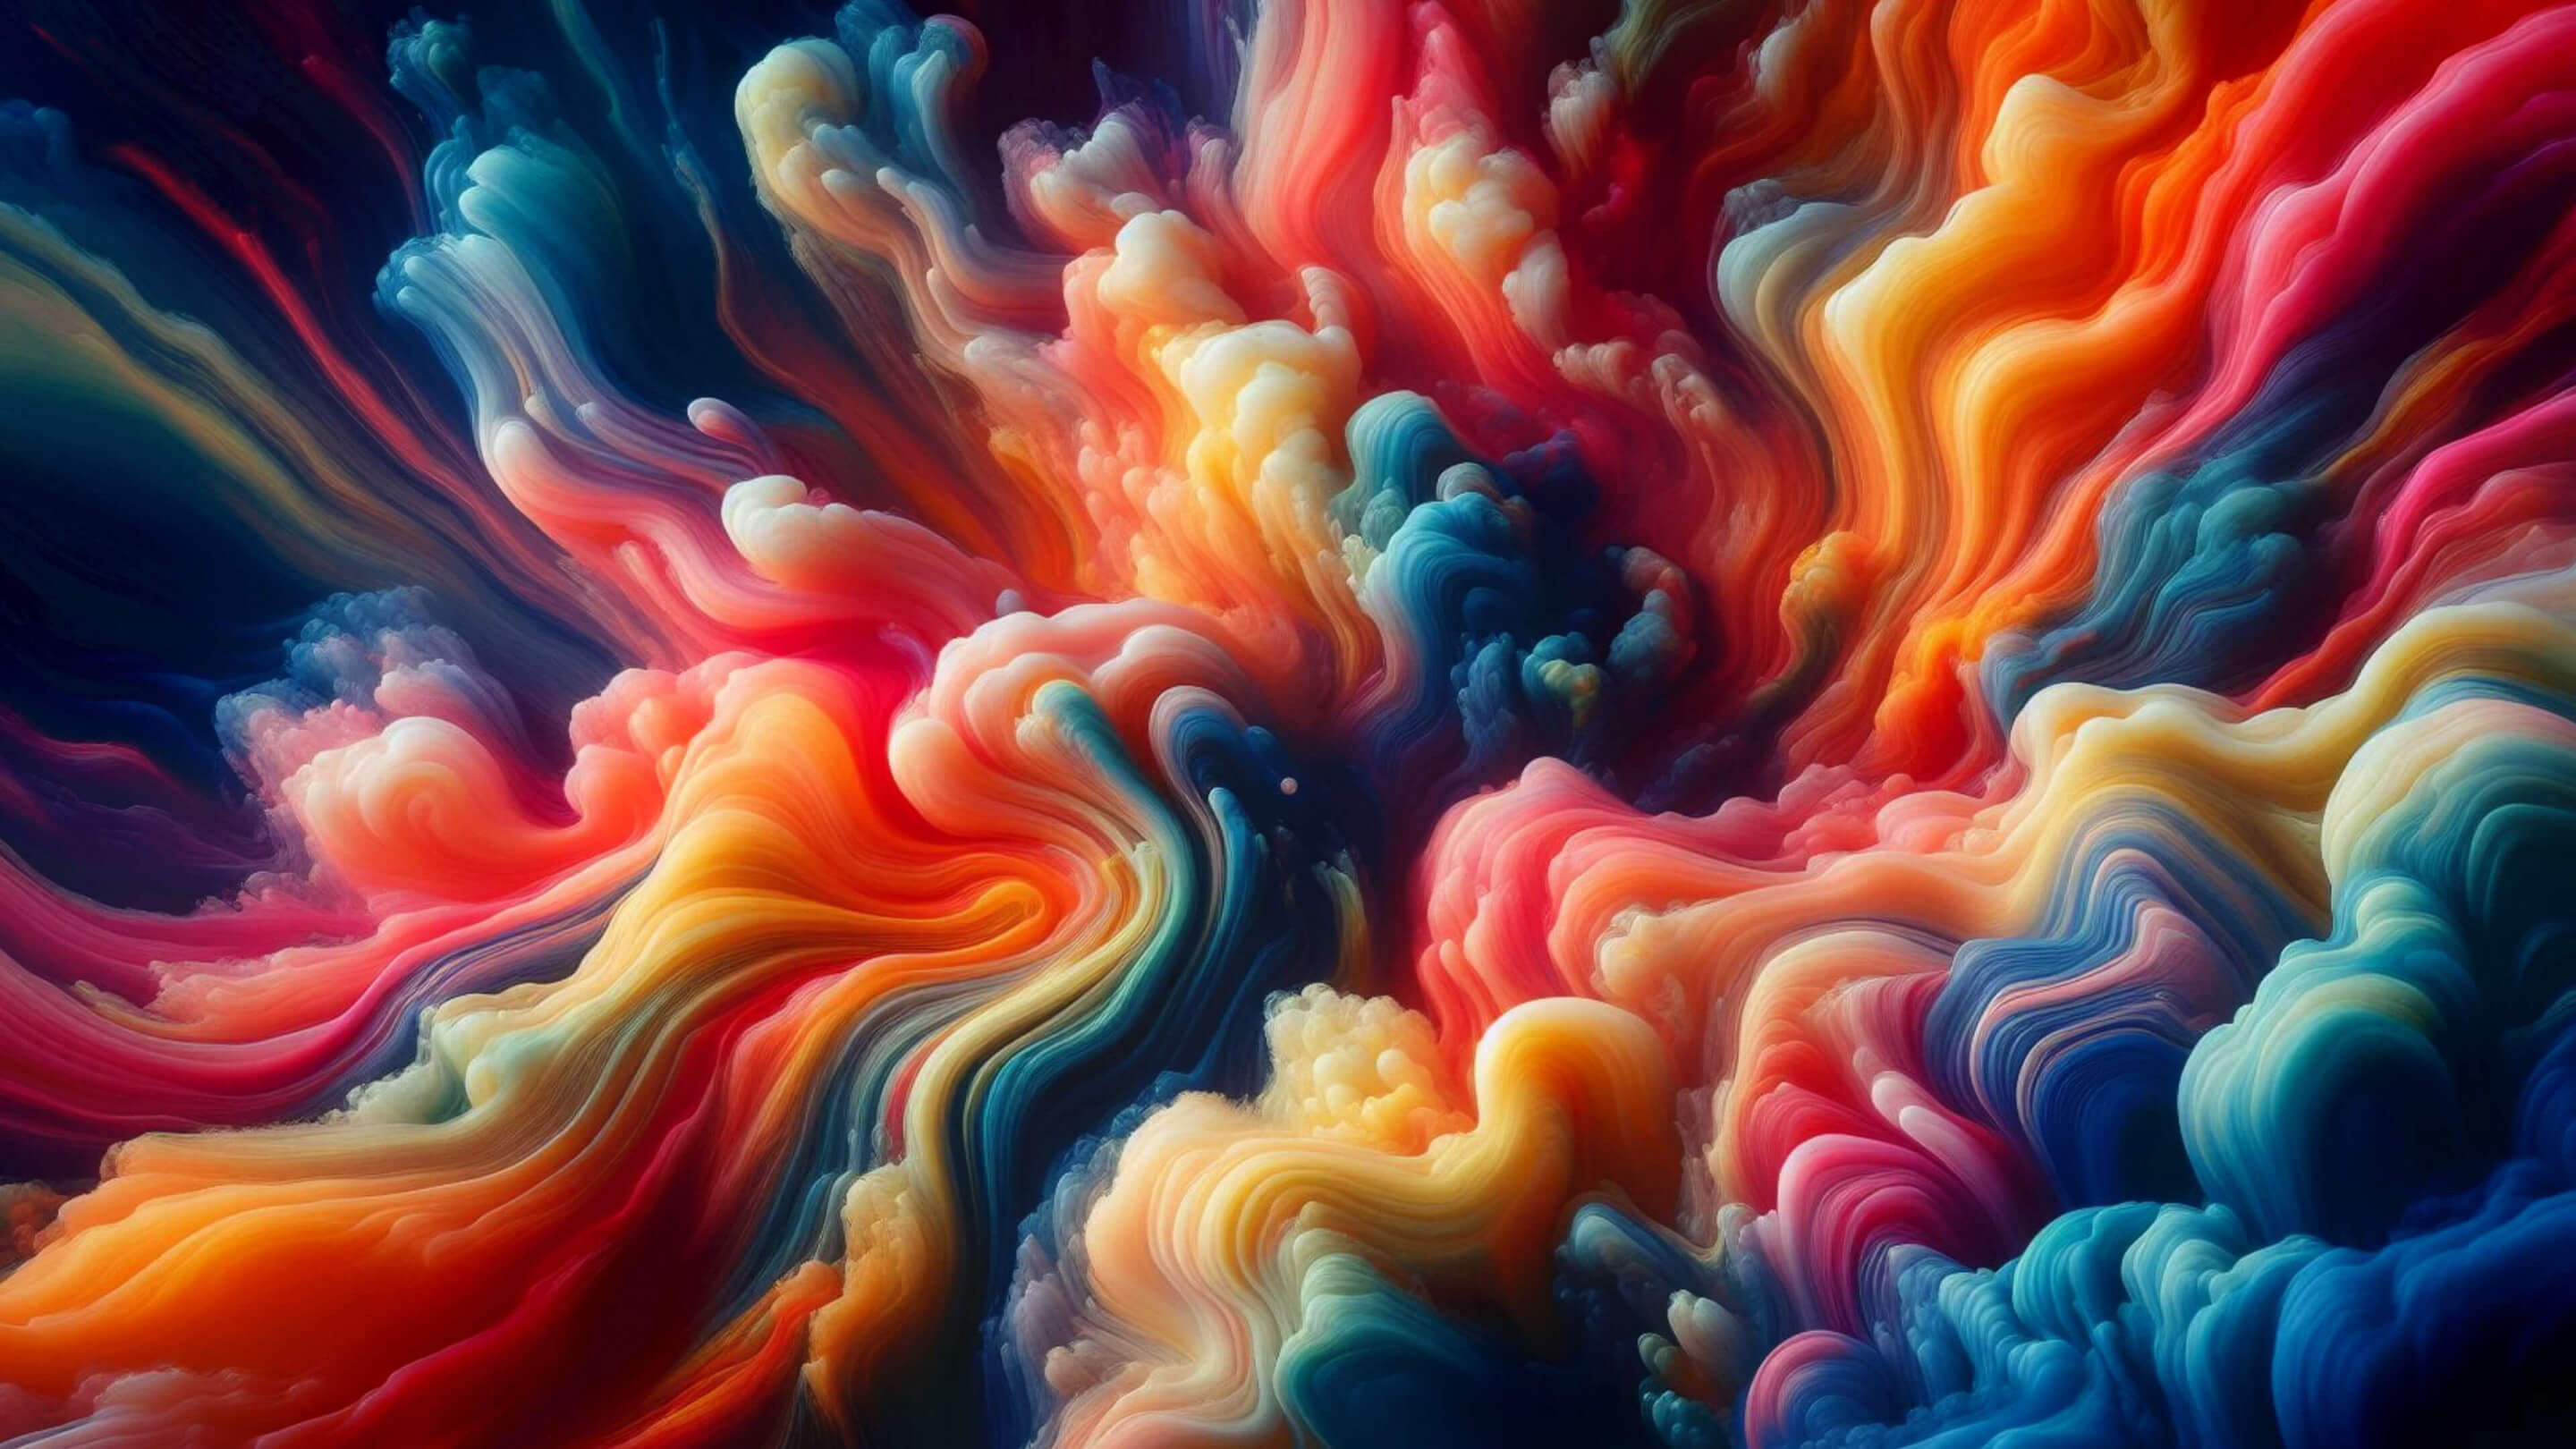 The liquid rainbow wallpaper 2880x1620